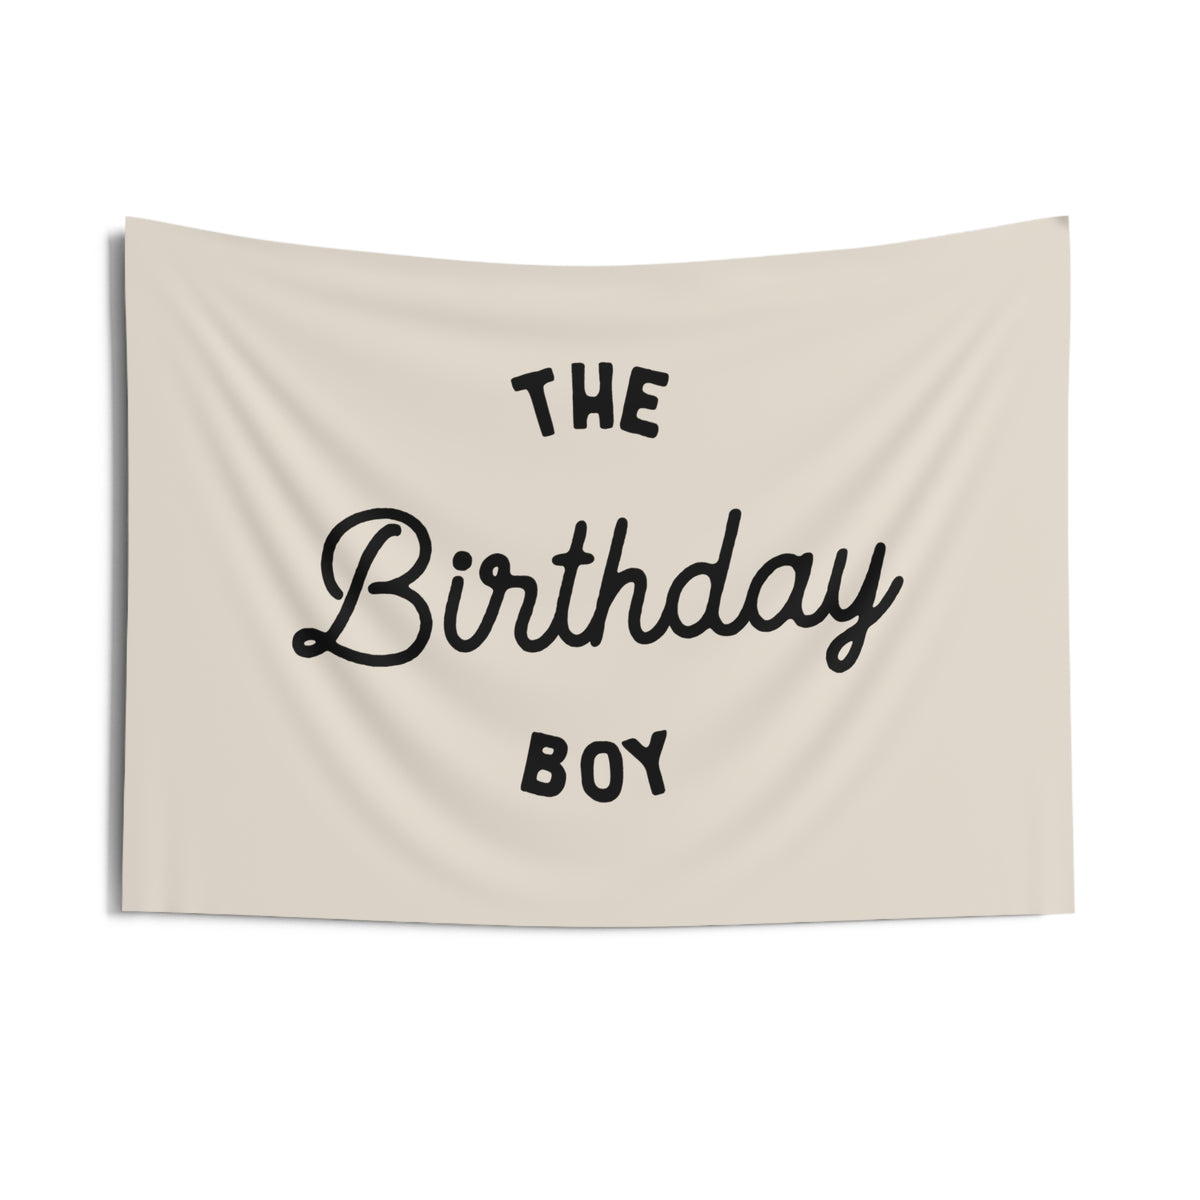 The Birthday Boy Wall Tapestries